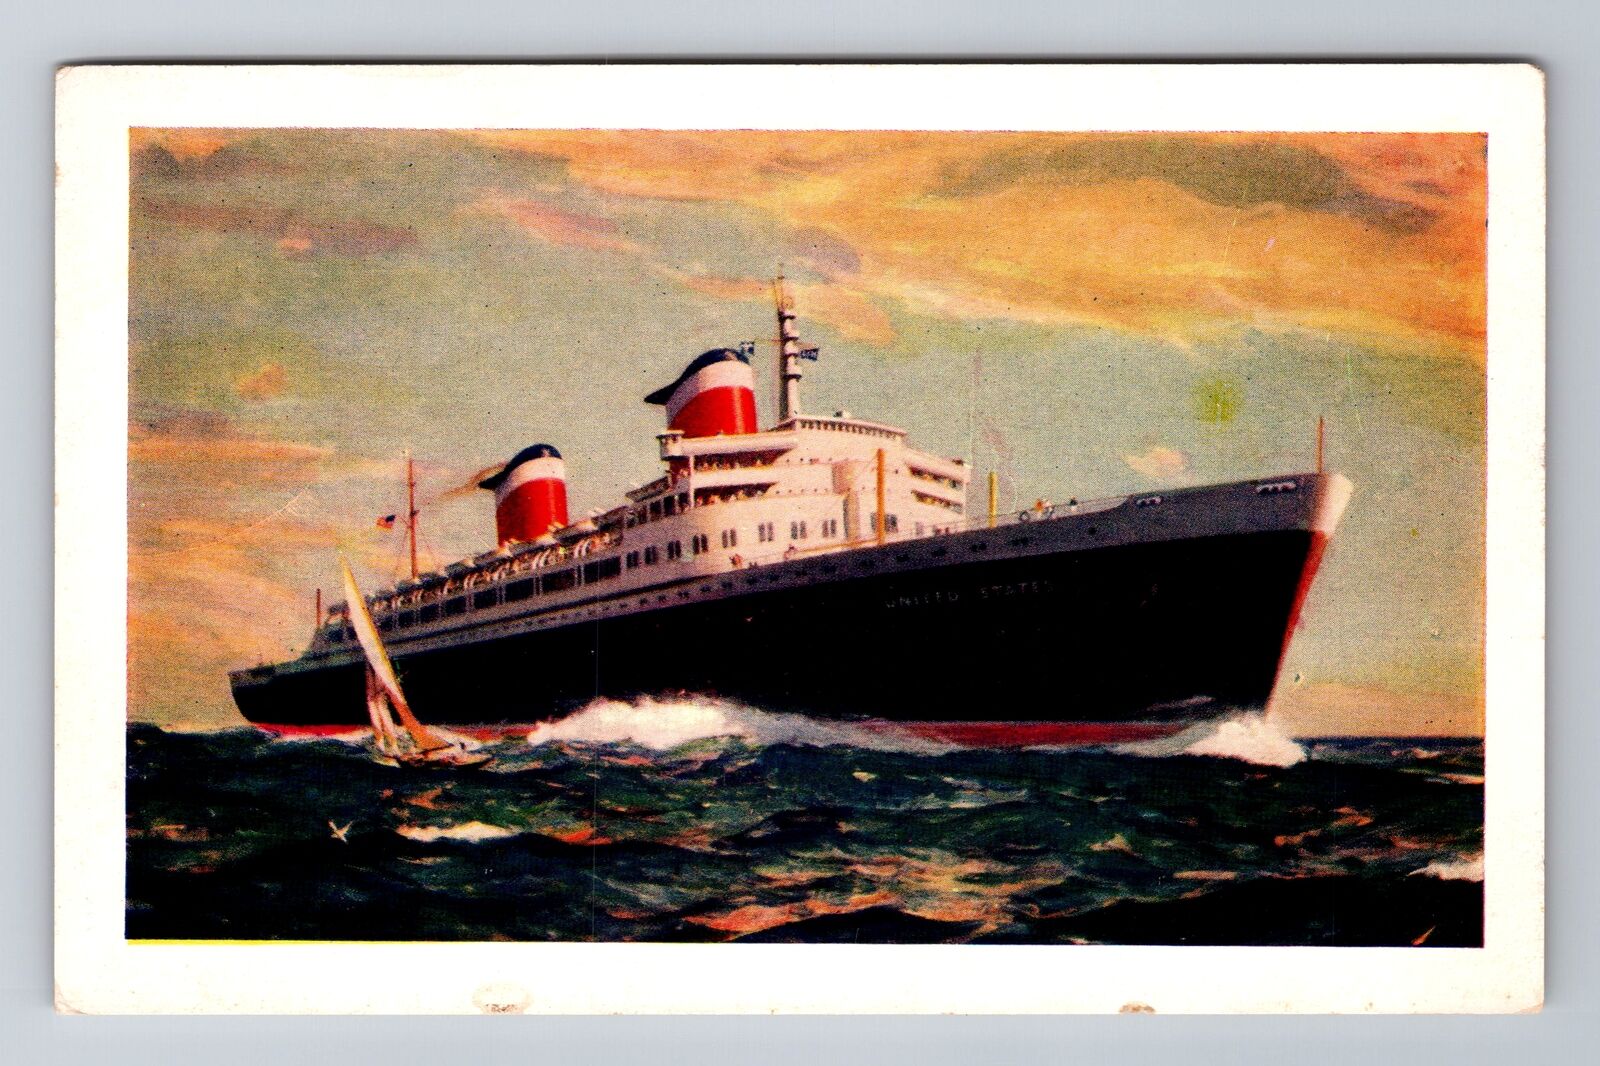 New SS United States, Ship, Transportation, Antique, Vintage Souvenir Postcard